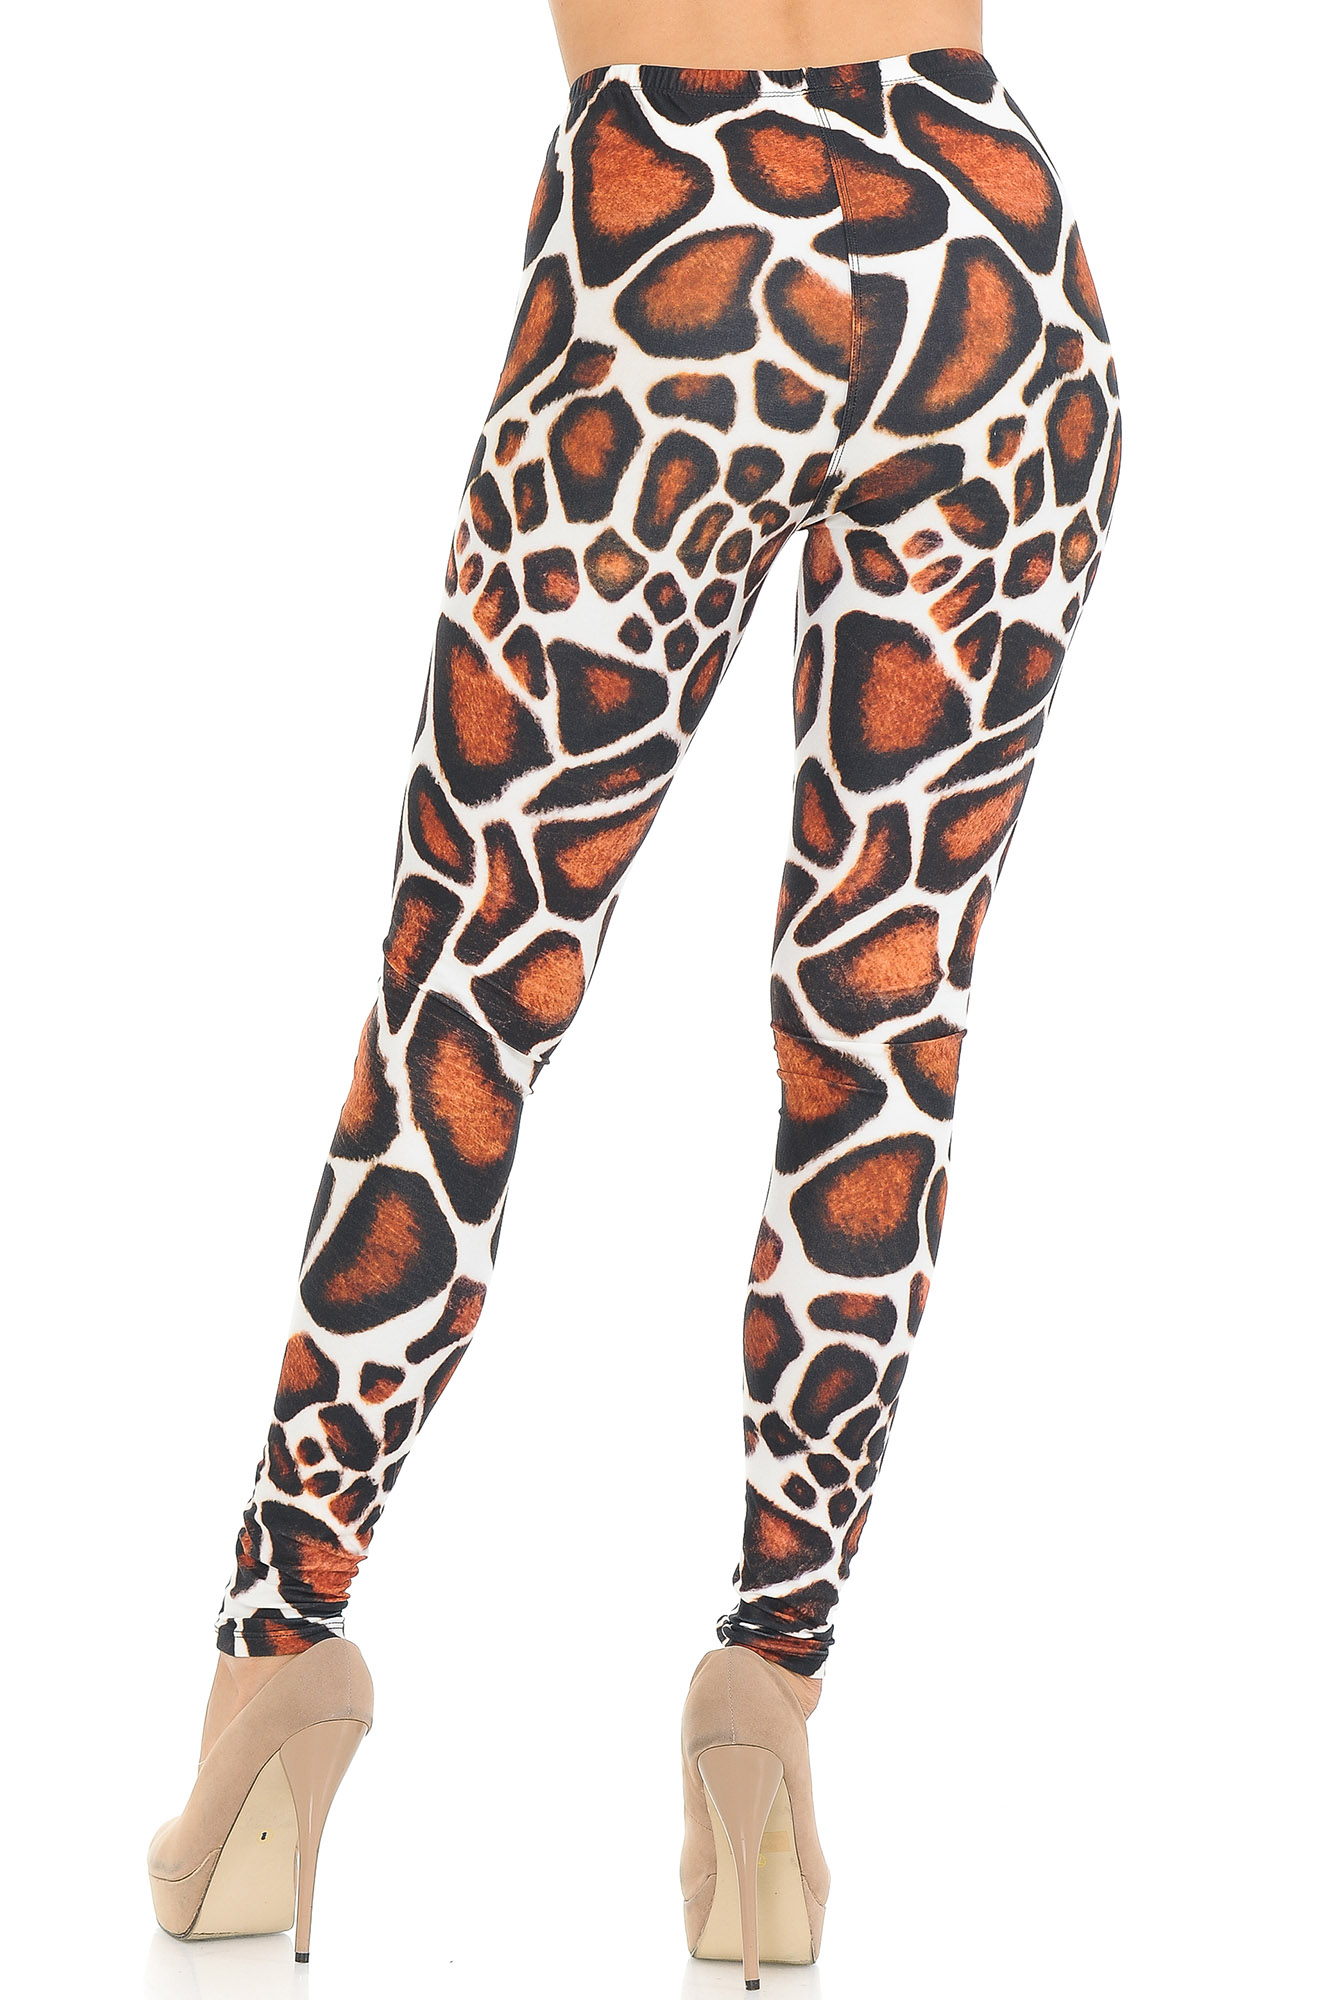 Wholesale Creamy Soft Giraffe Print Leggings - USA Fashion™